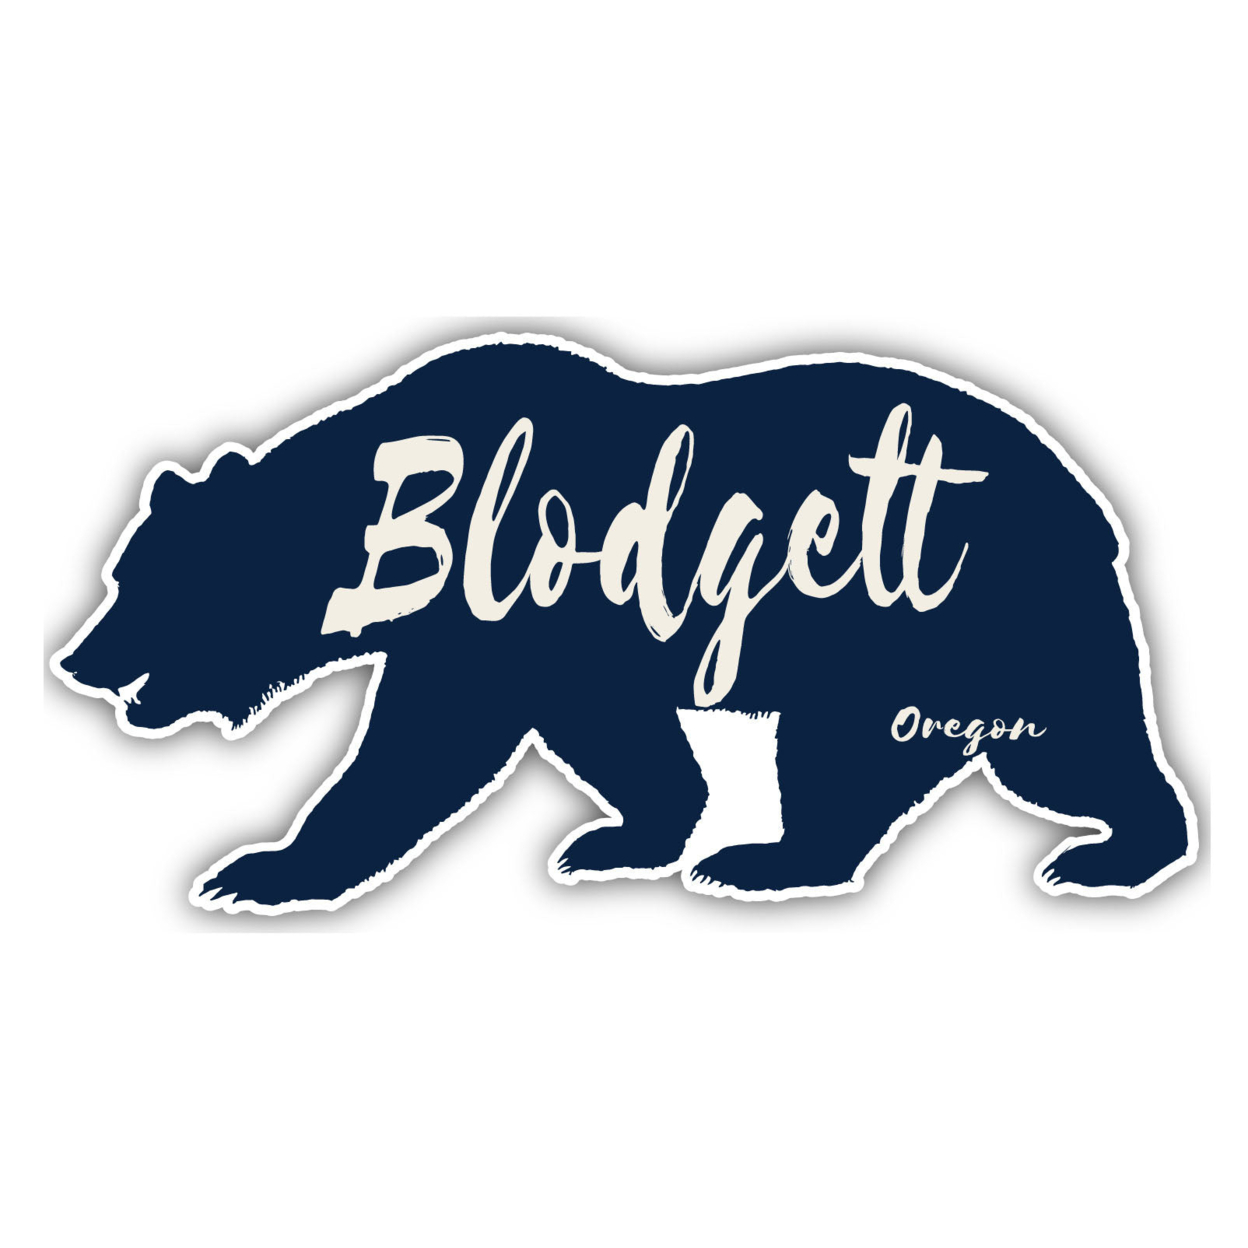 Blodgett Oregon Souvenir Decorative Stickers (Choose Theme And Size) - 4-Pack, 2-Inch, Bear